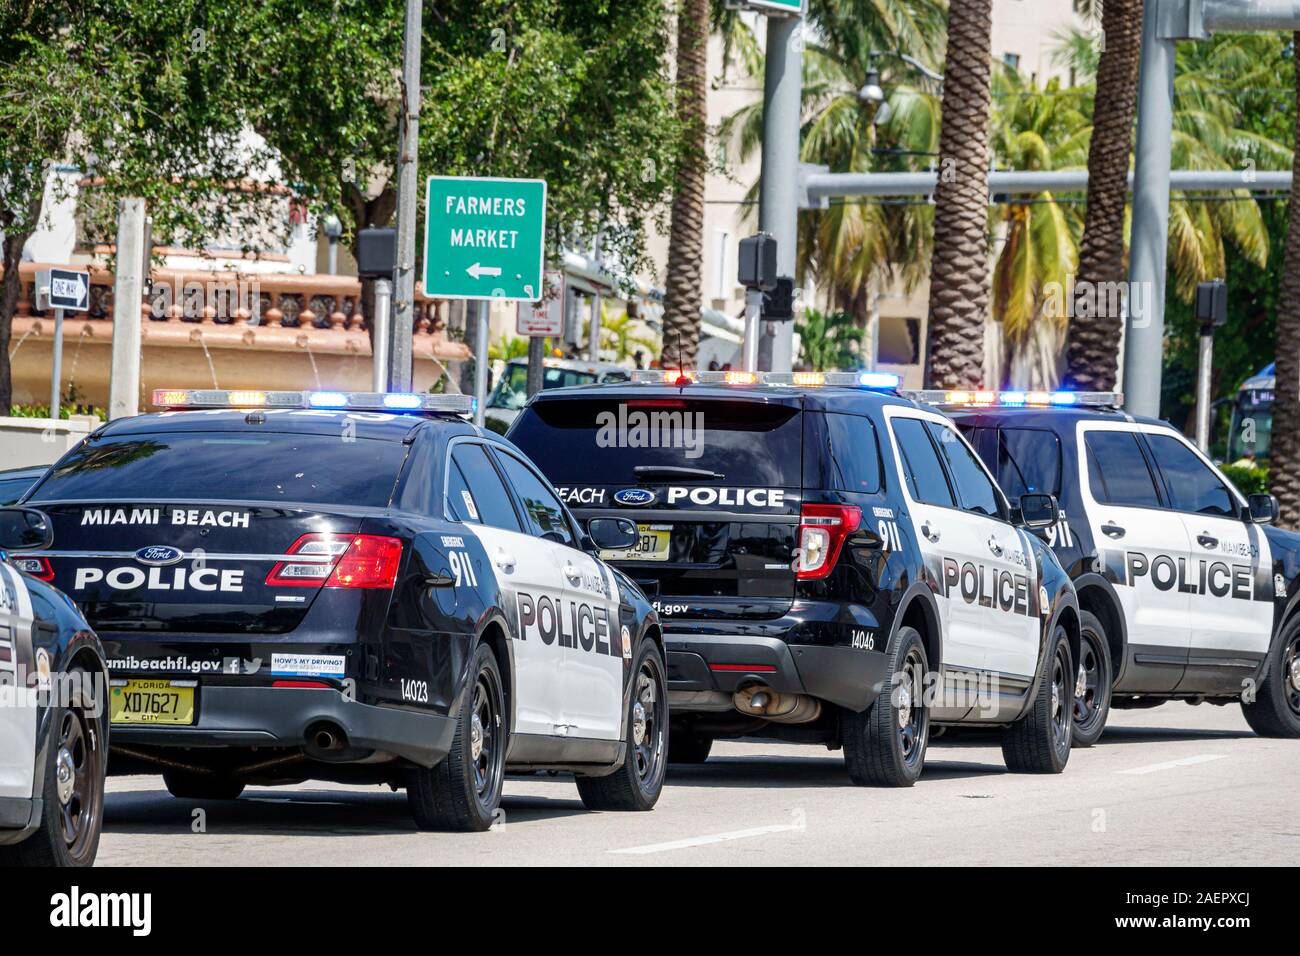 Miami Beach Florida,Normandy Isle,police,law enforcement,car,SUV,vehicles,flashing blue red light bars,FL191025001 Stock Photo